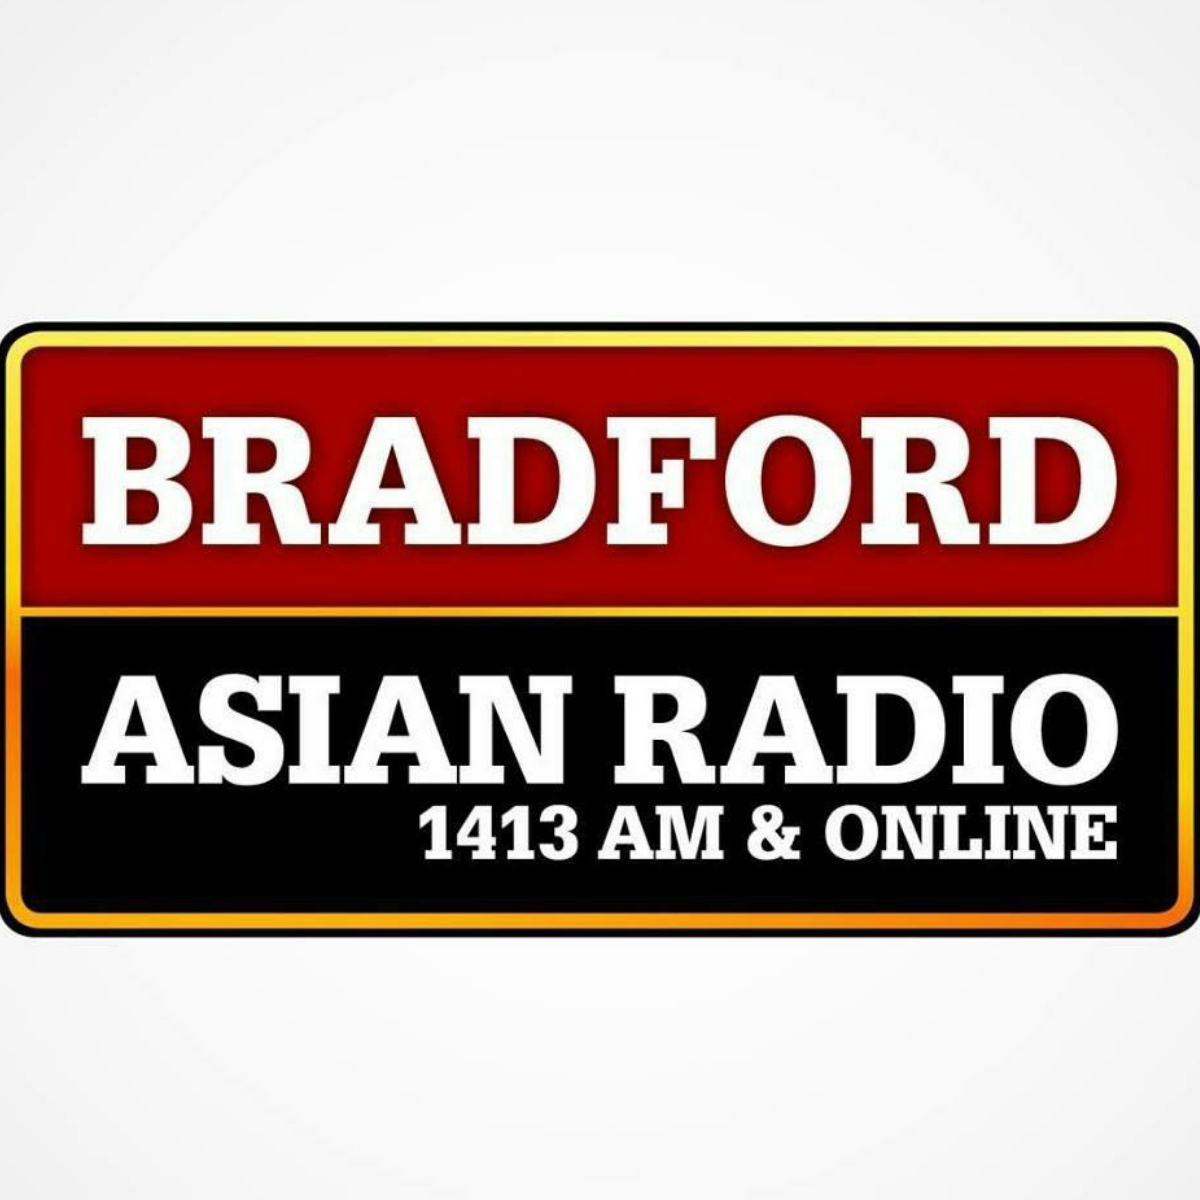 Bradford Asian Radio 1413 AM/MW